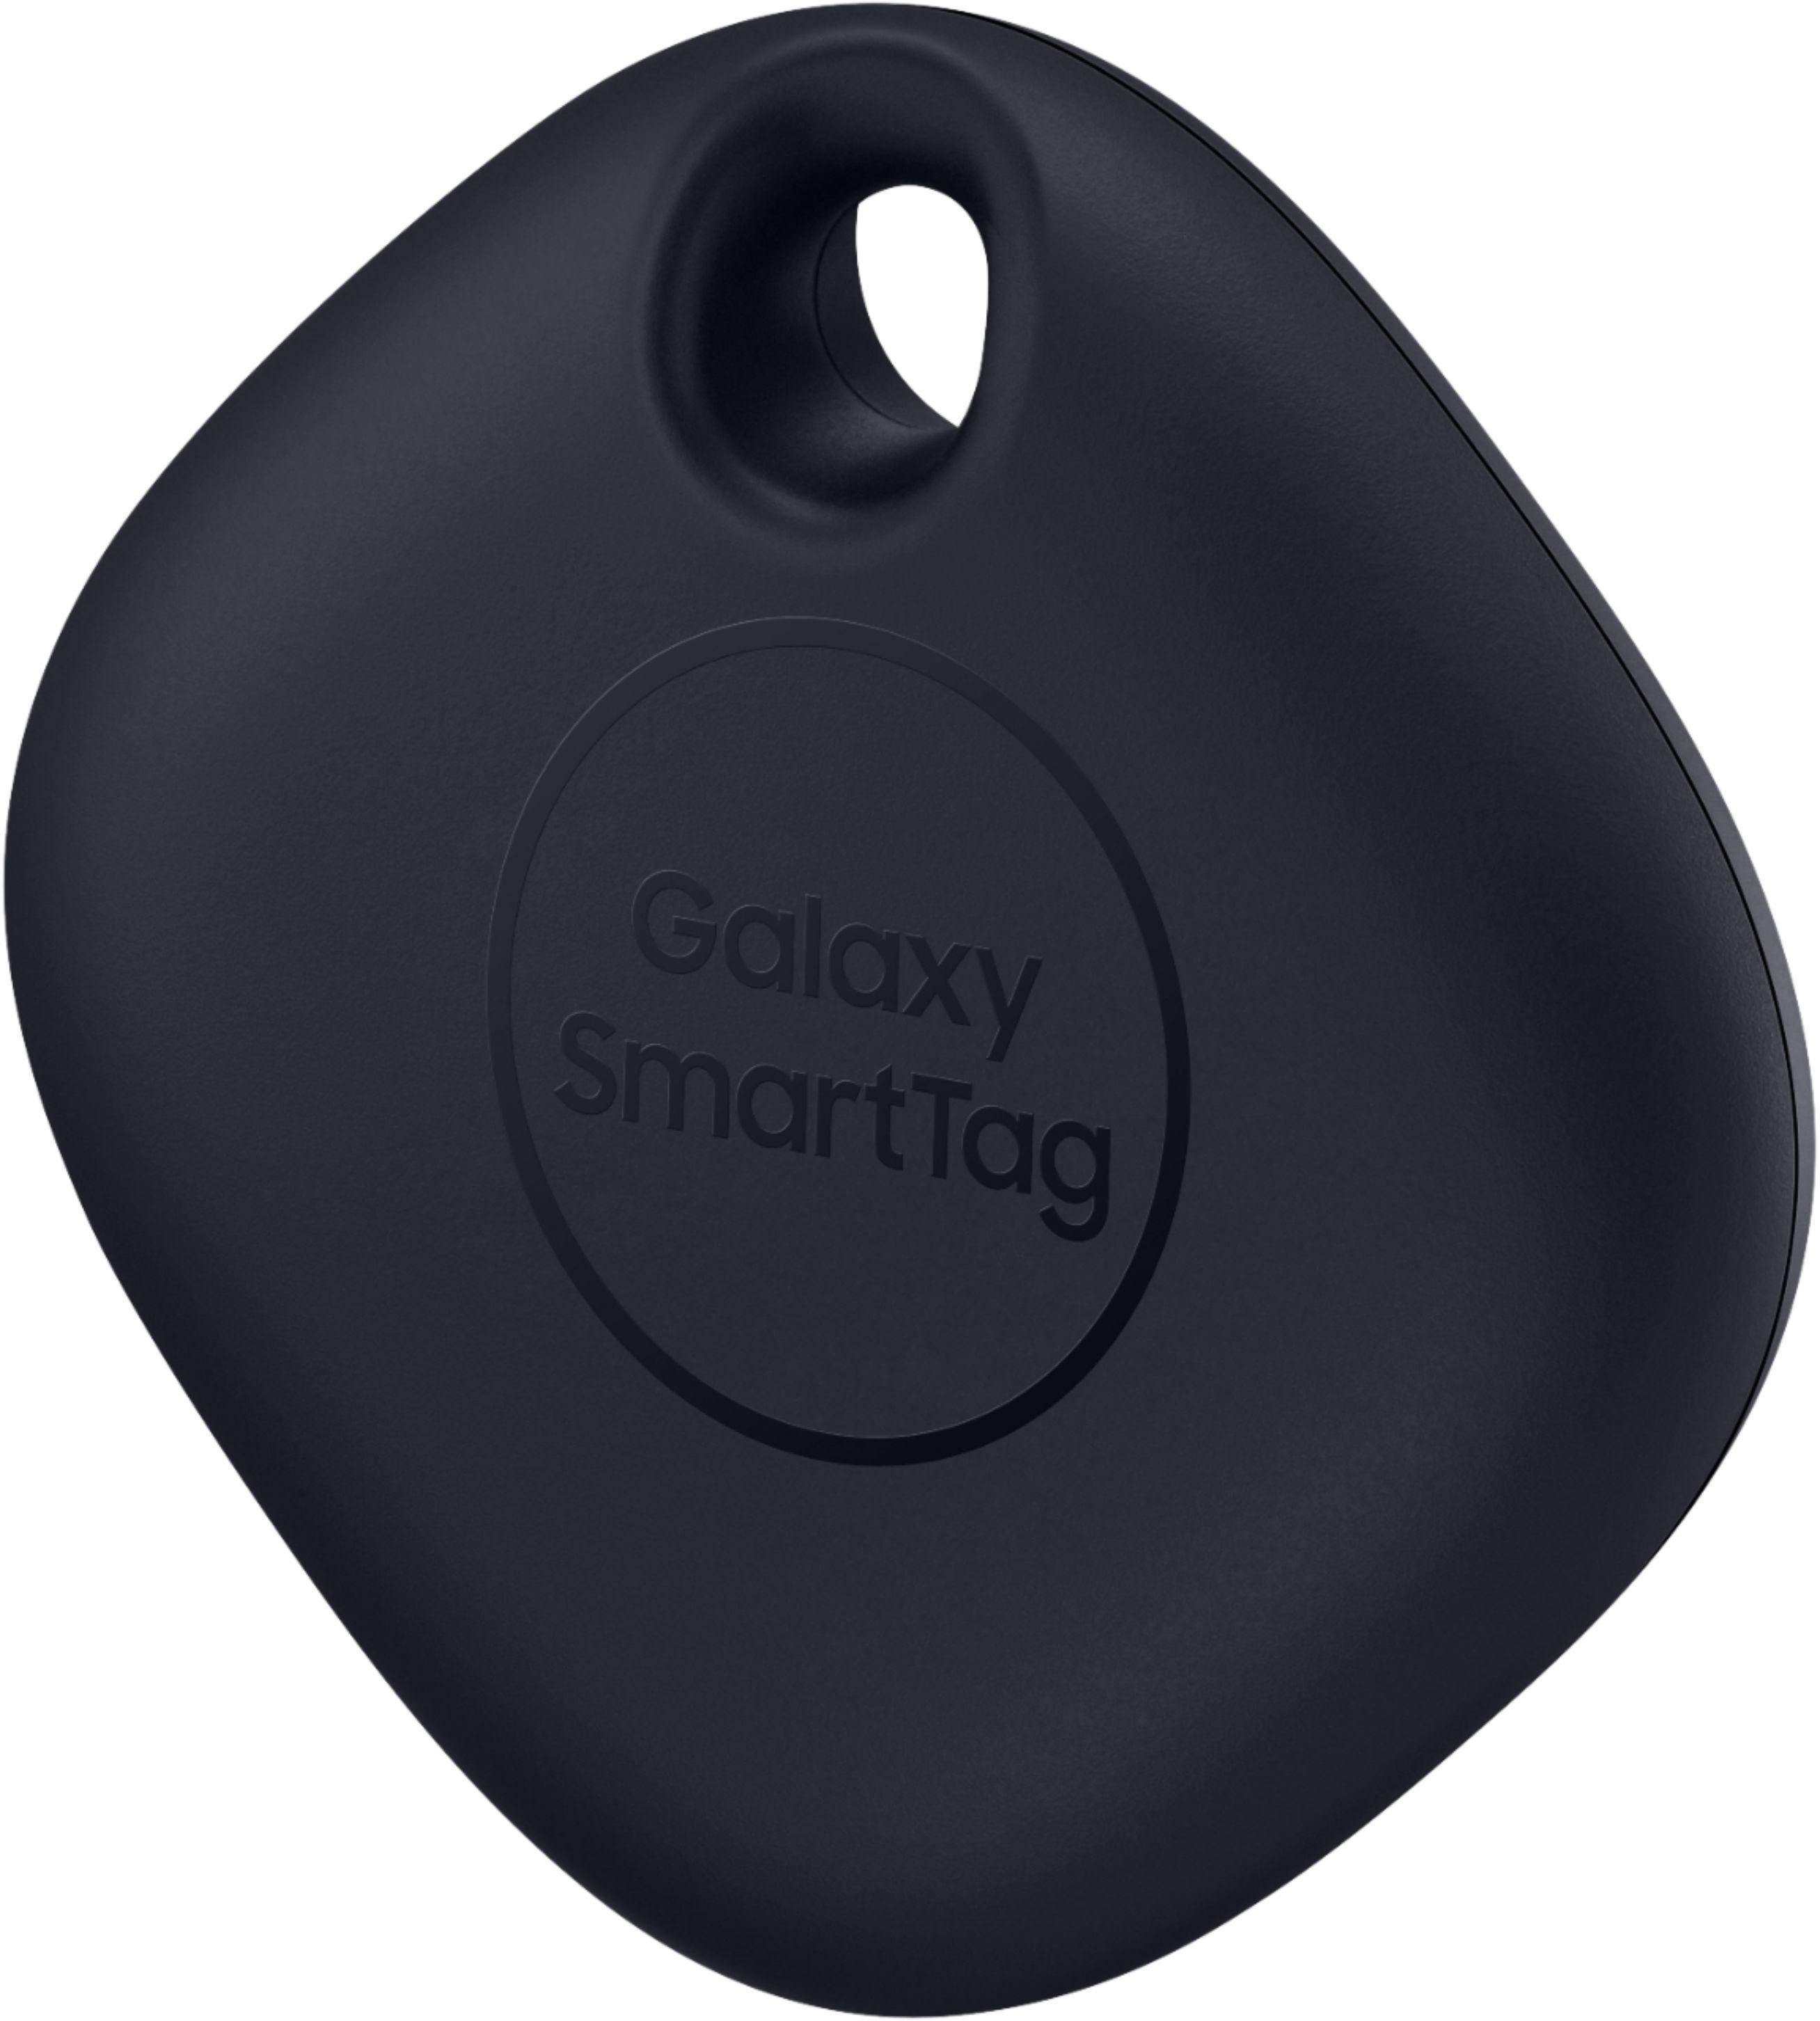  Samsung Galaxy SmartTag (2 Pack) Bluetooth Tracker